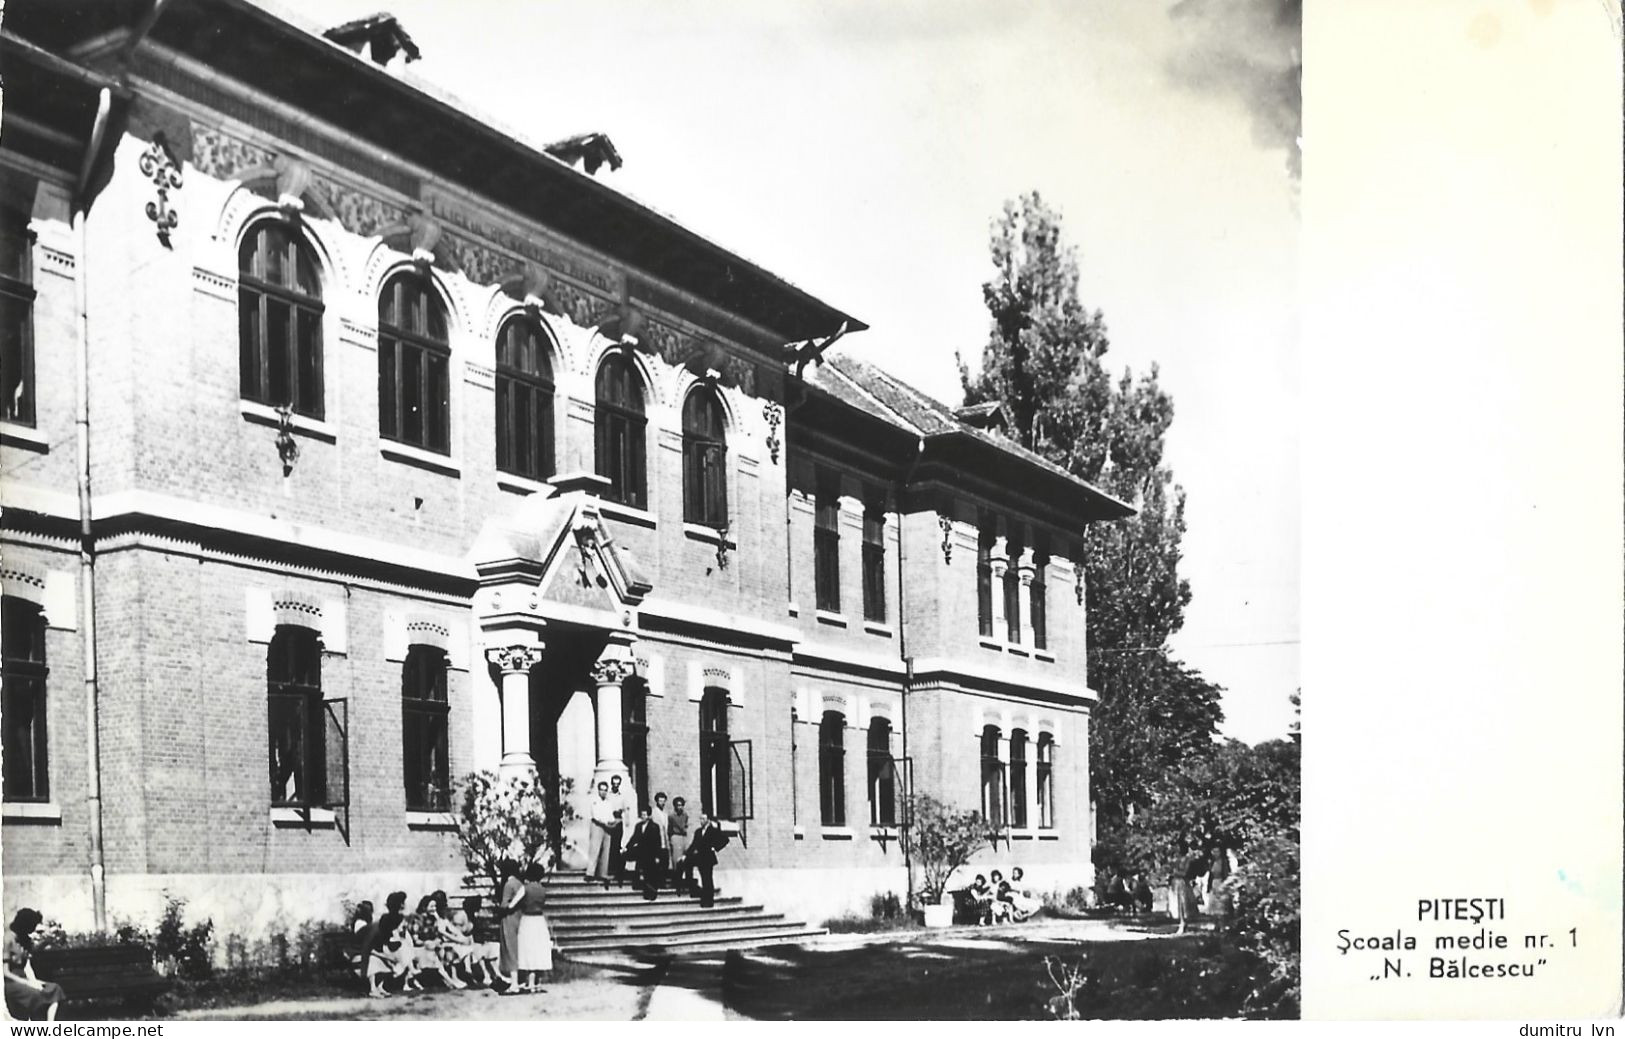 ROMANIA PITESTI - SECONDARY SCHOOL NO. 1 ''N. BALCESCU'', BUILDING, ARCHITECTURE, PEOPLE ON THE BENCH - Impuestos